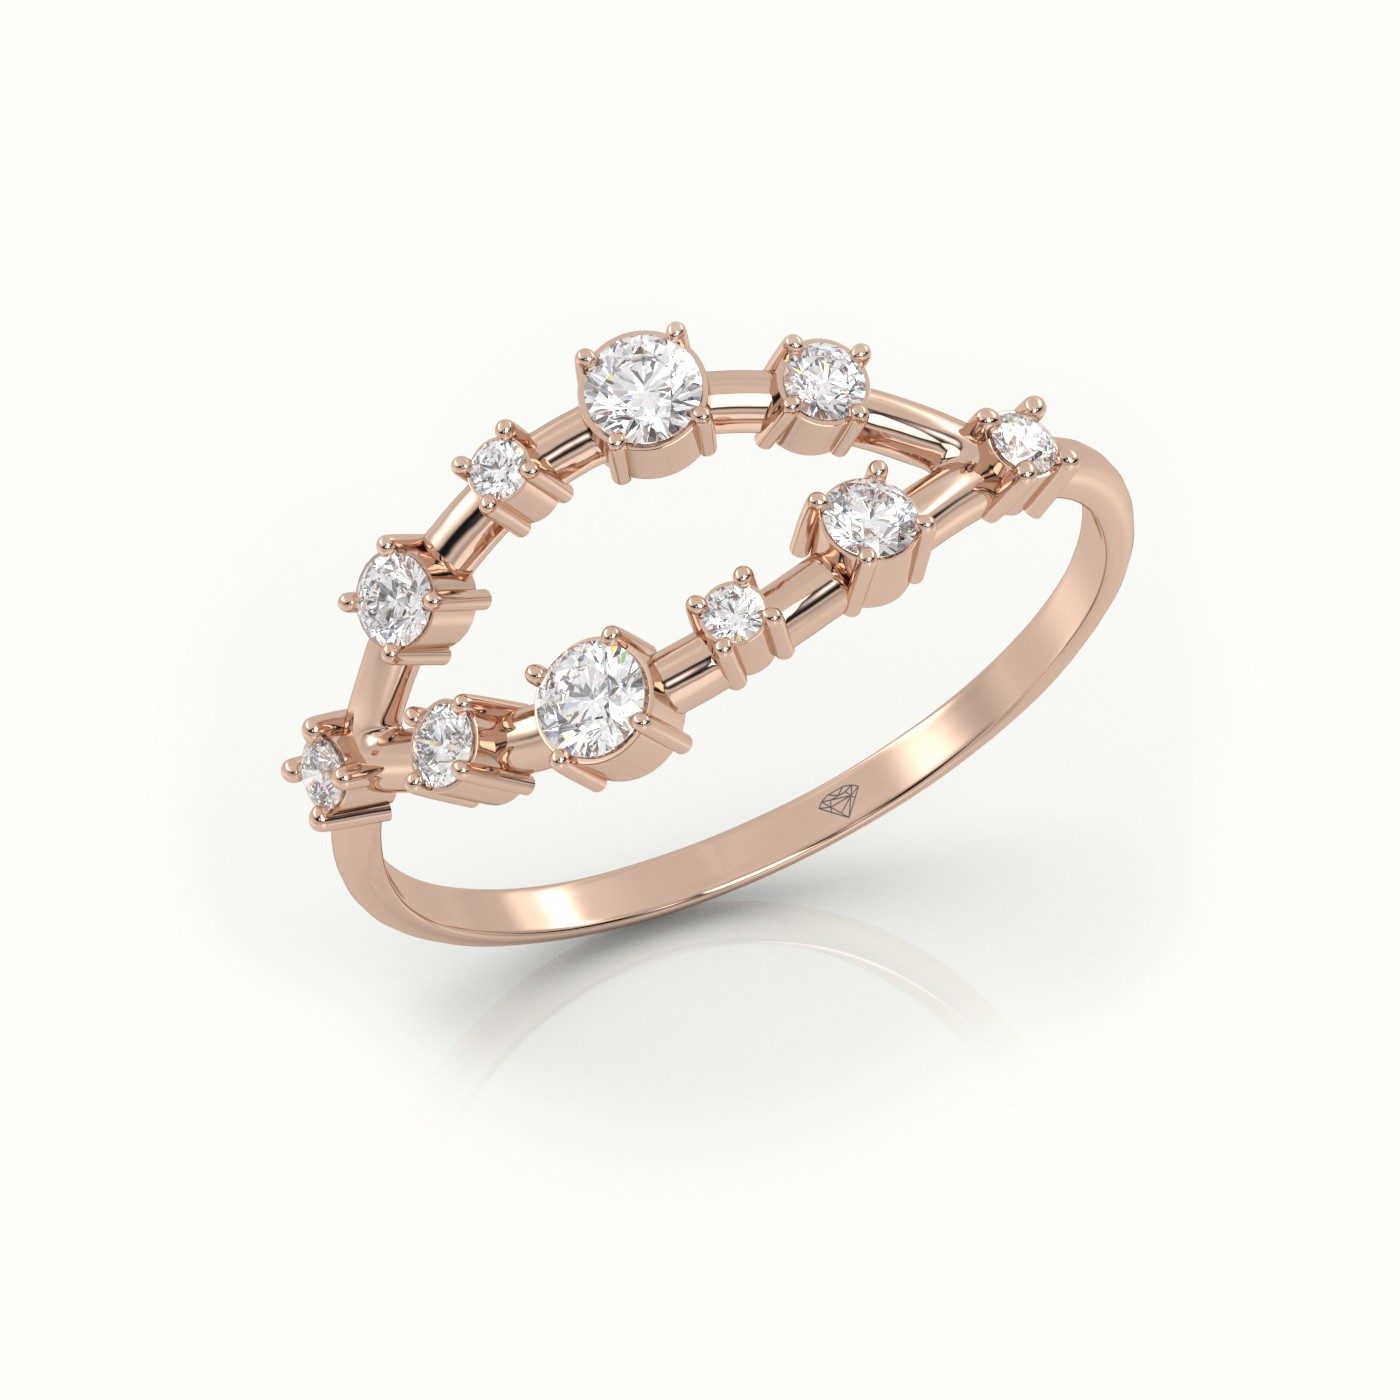 18k rose gold  round cut diamond 4 prongs open setting designer ring Photos & images